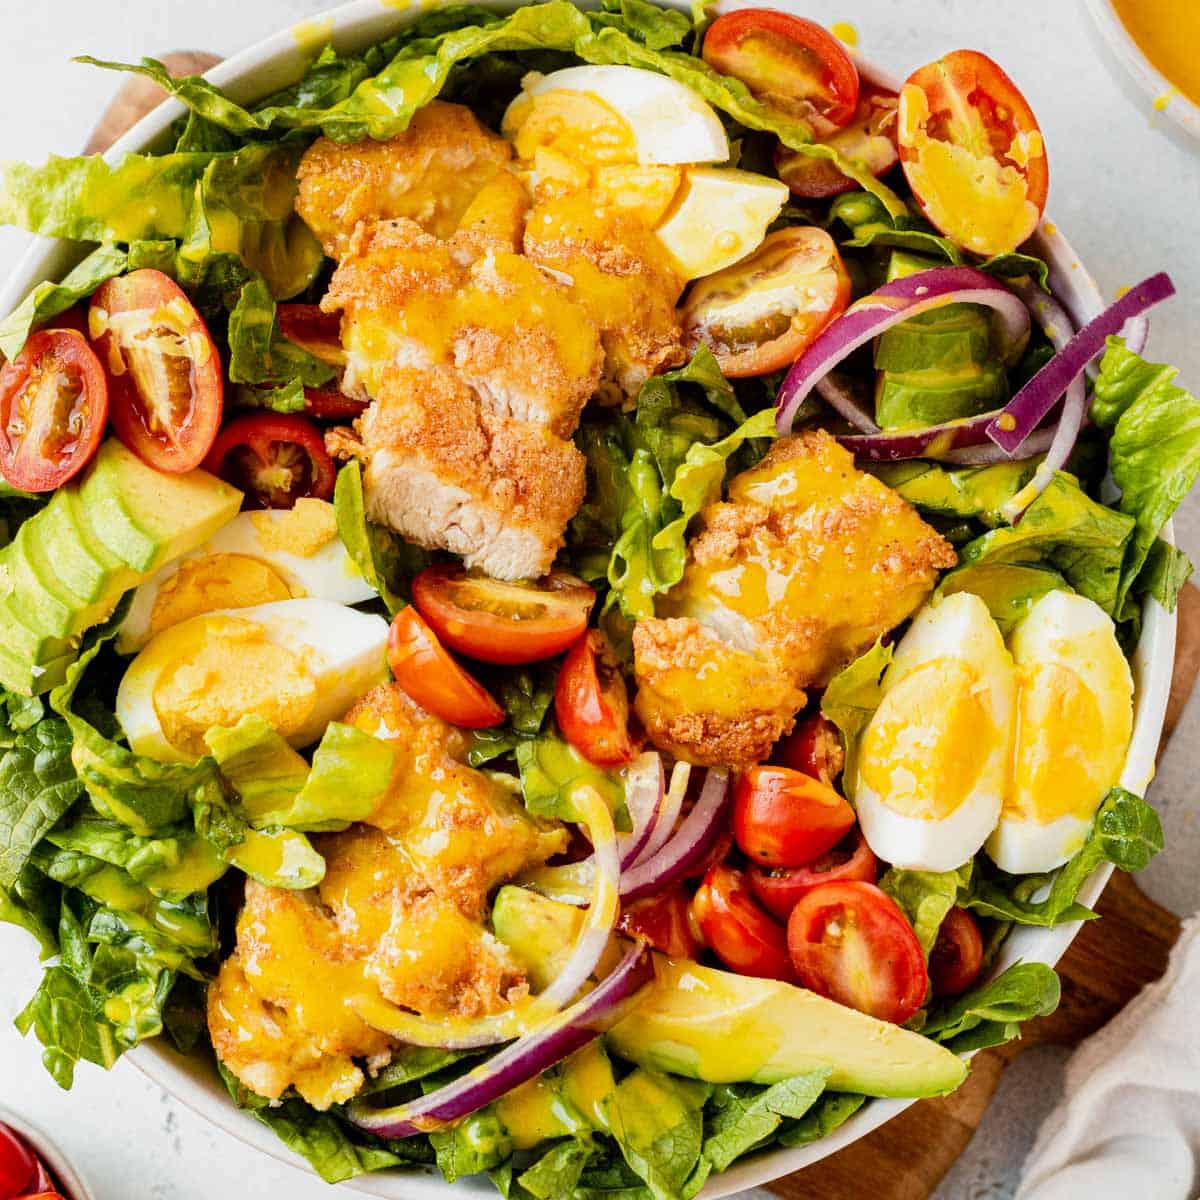 https://whatmollymade.com/wp-content/uploads/2020/04/crispy-chicken-salad-14.jpg